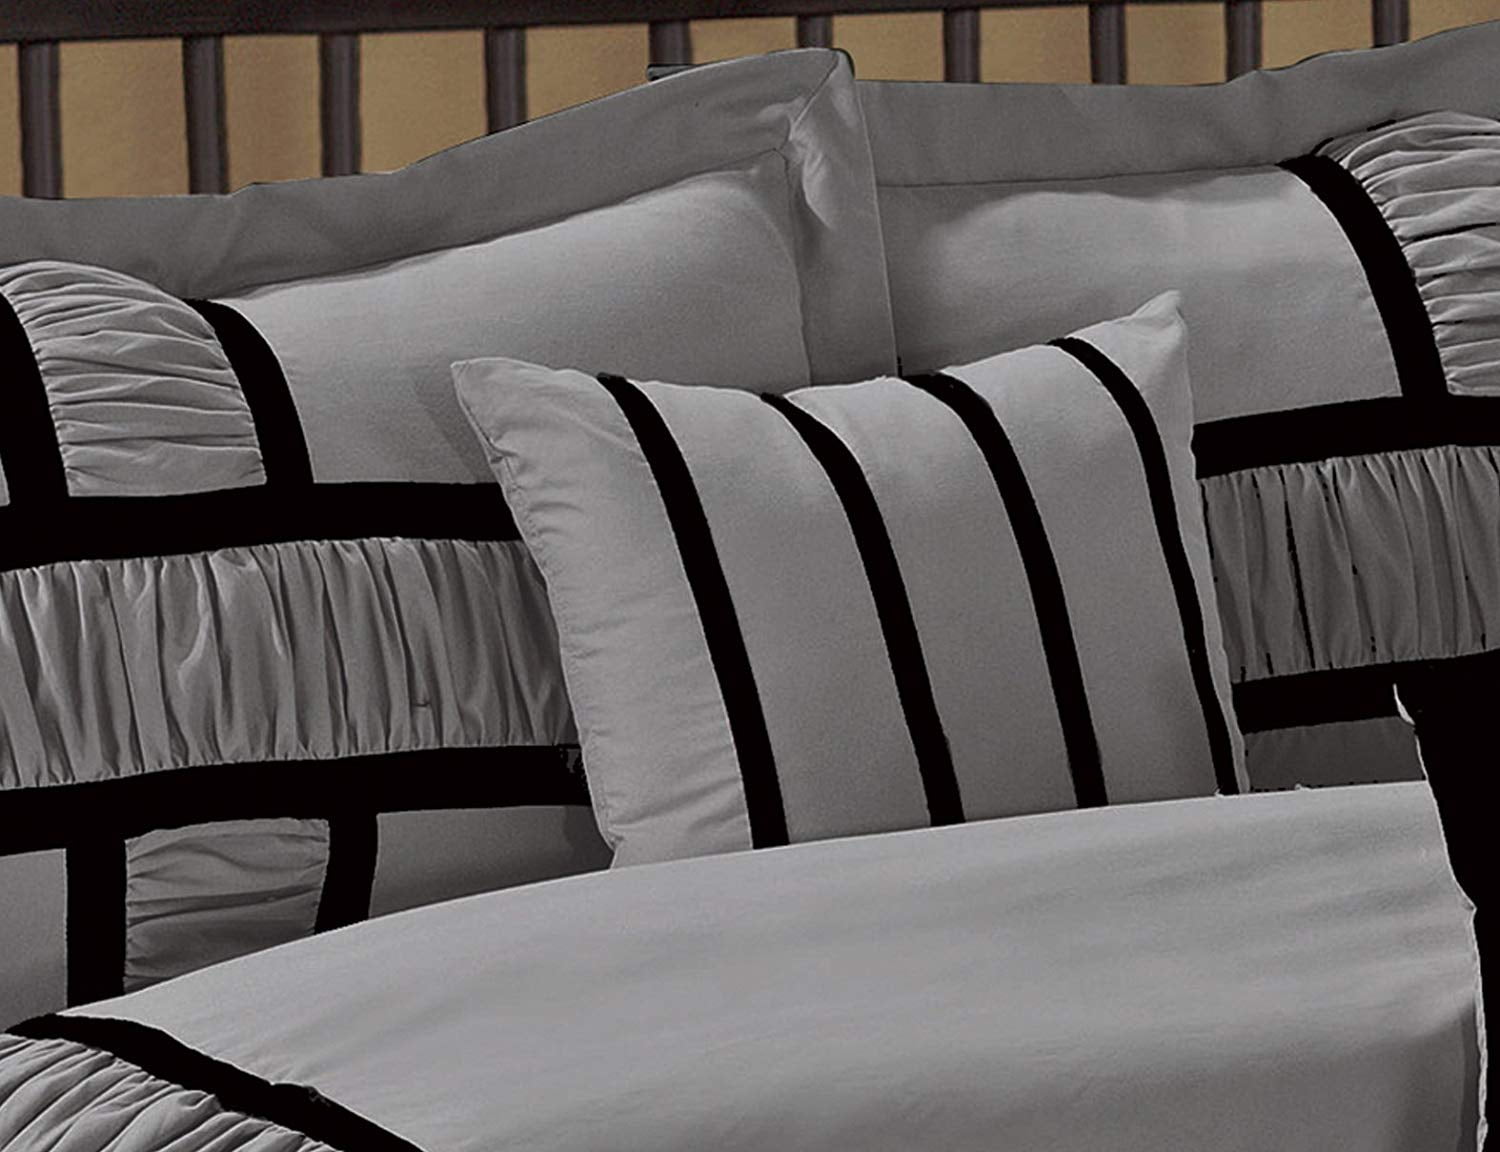  KAKIJUMN 7 Piece Bed in a Bag Stripe Comforter Set Full Size,  White Grey Black Patchwork Striped Comforter and Sheet Set, All Season Soft  Microfiber Complete Bedding Sets(Grey,Full) : Home 